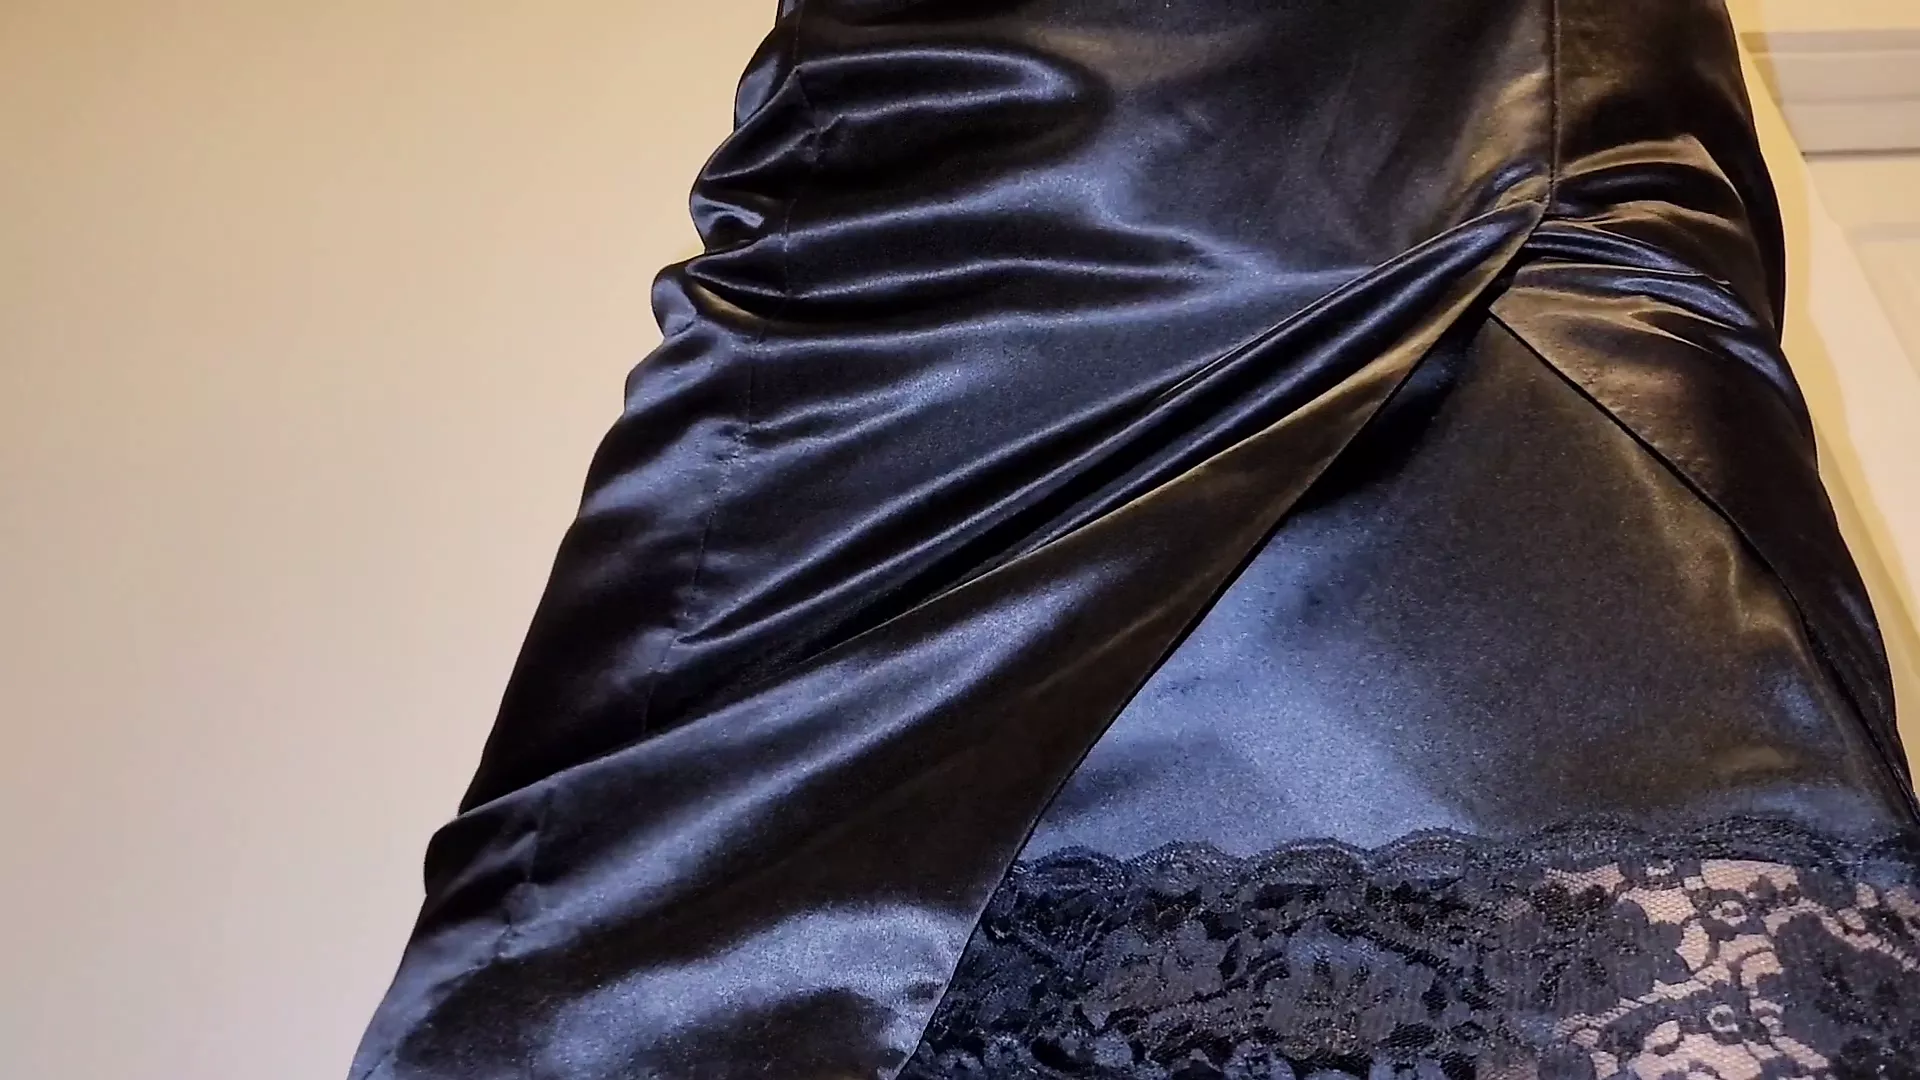 Black Liquid Satin Skirt With Black Satin Half Slip